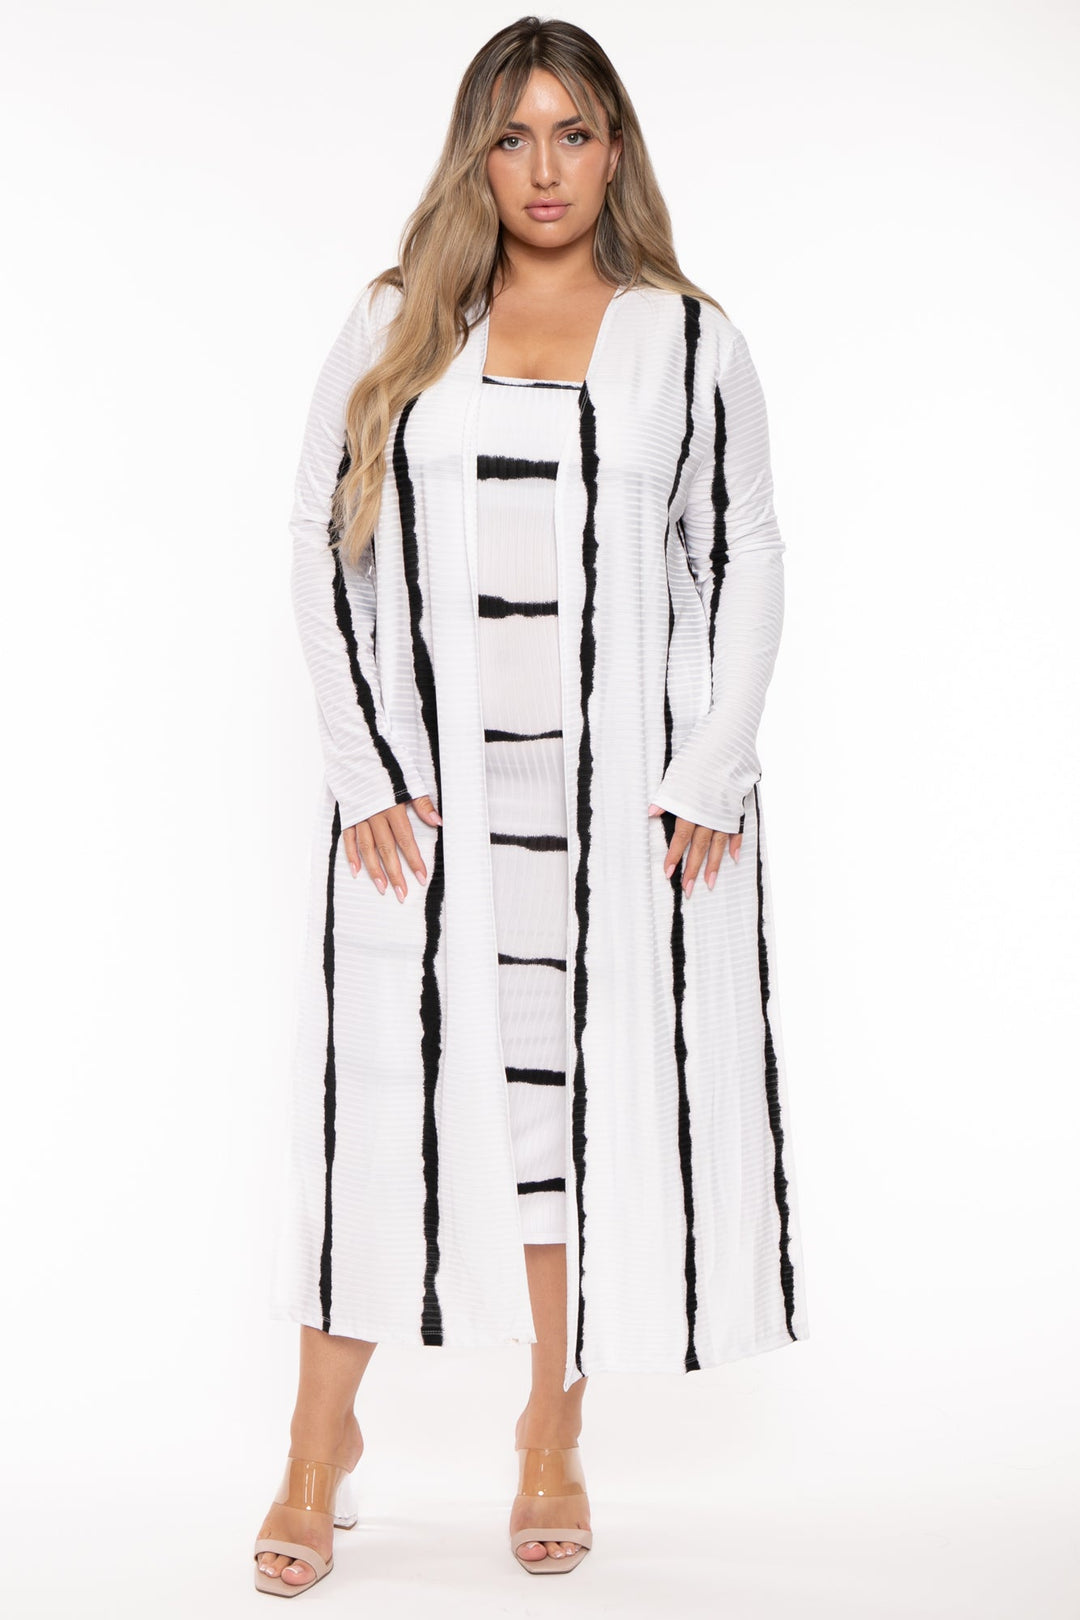 Gibiu Matching Sets Plus Size Lizah Tube Dress & Cardigan Set  - White